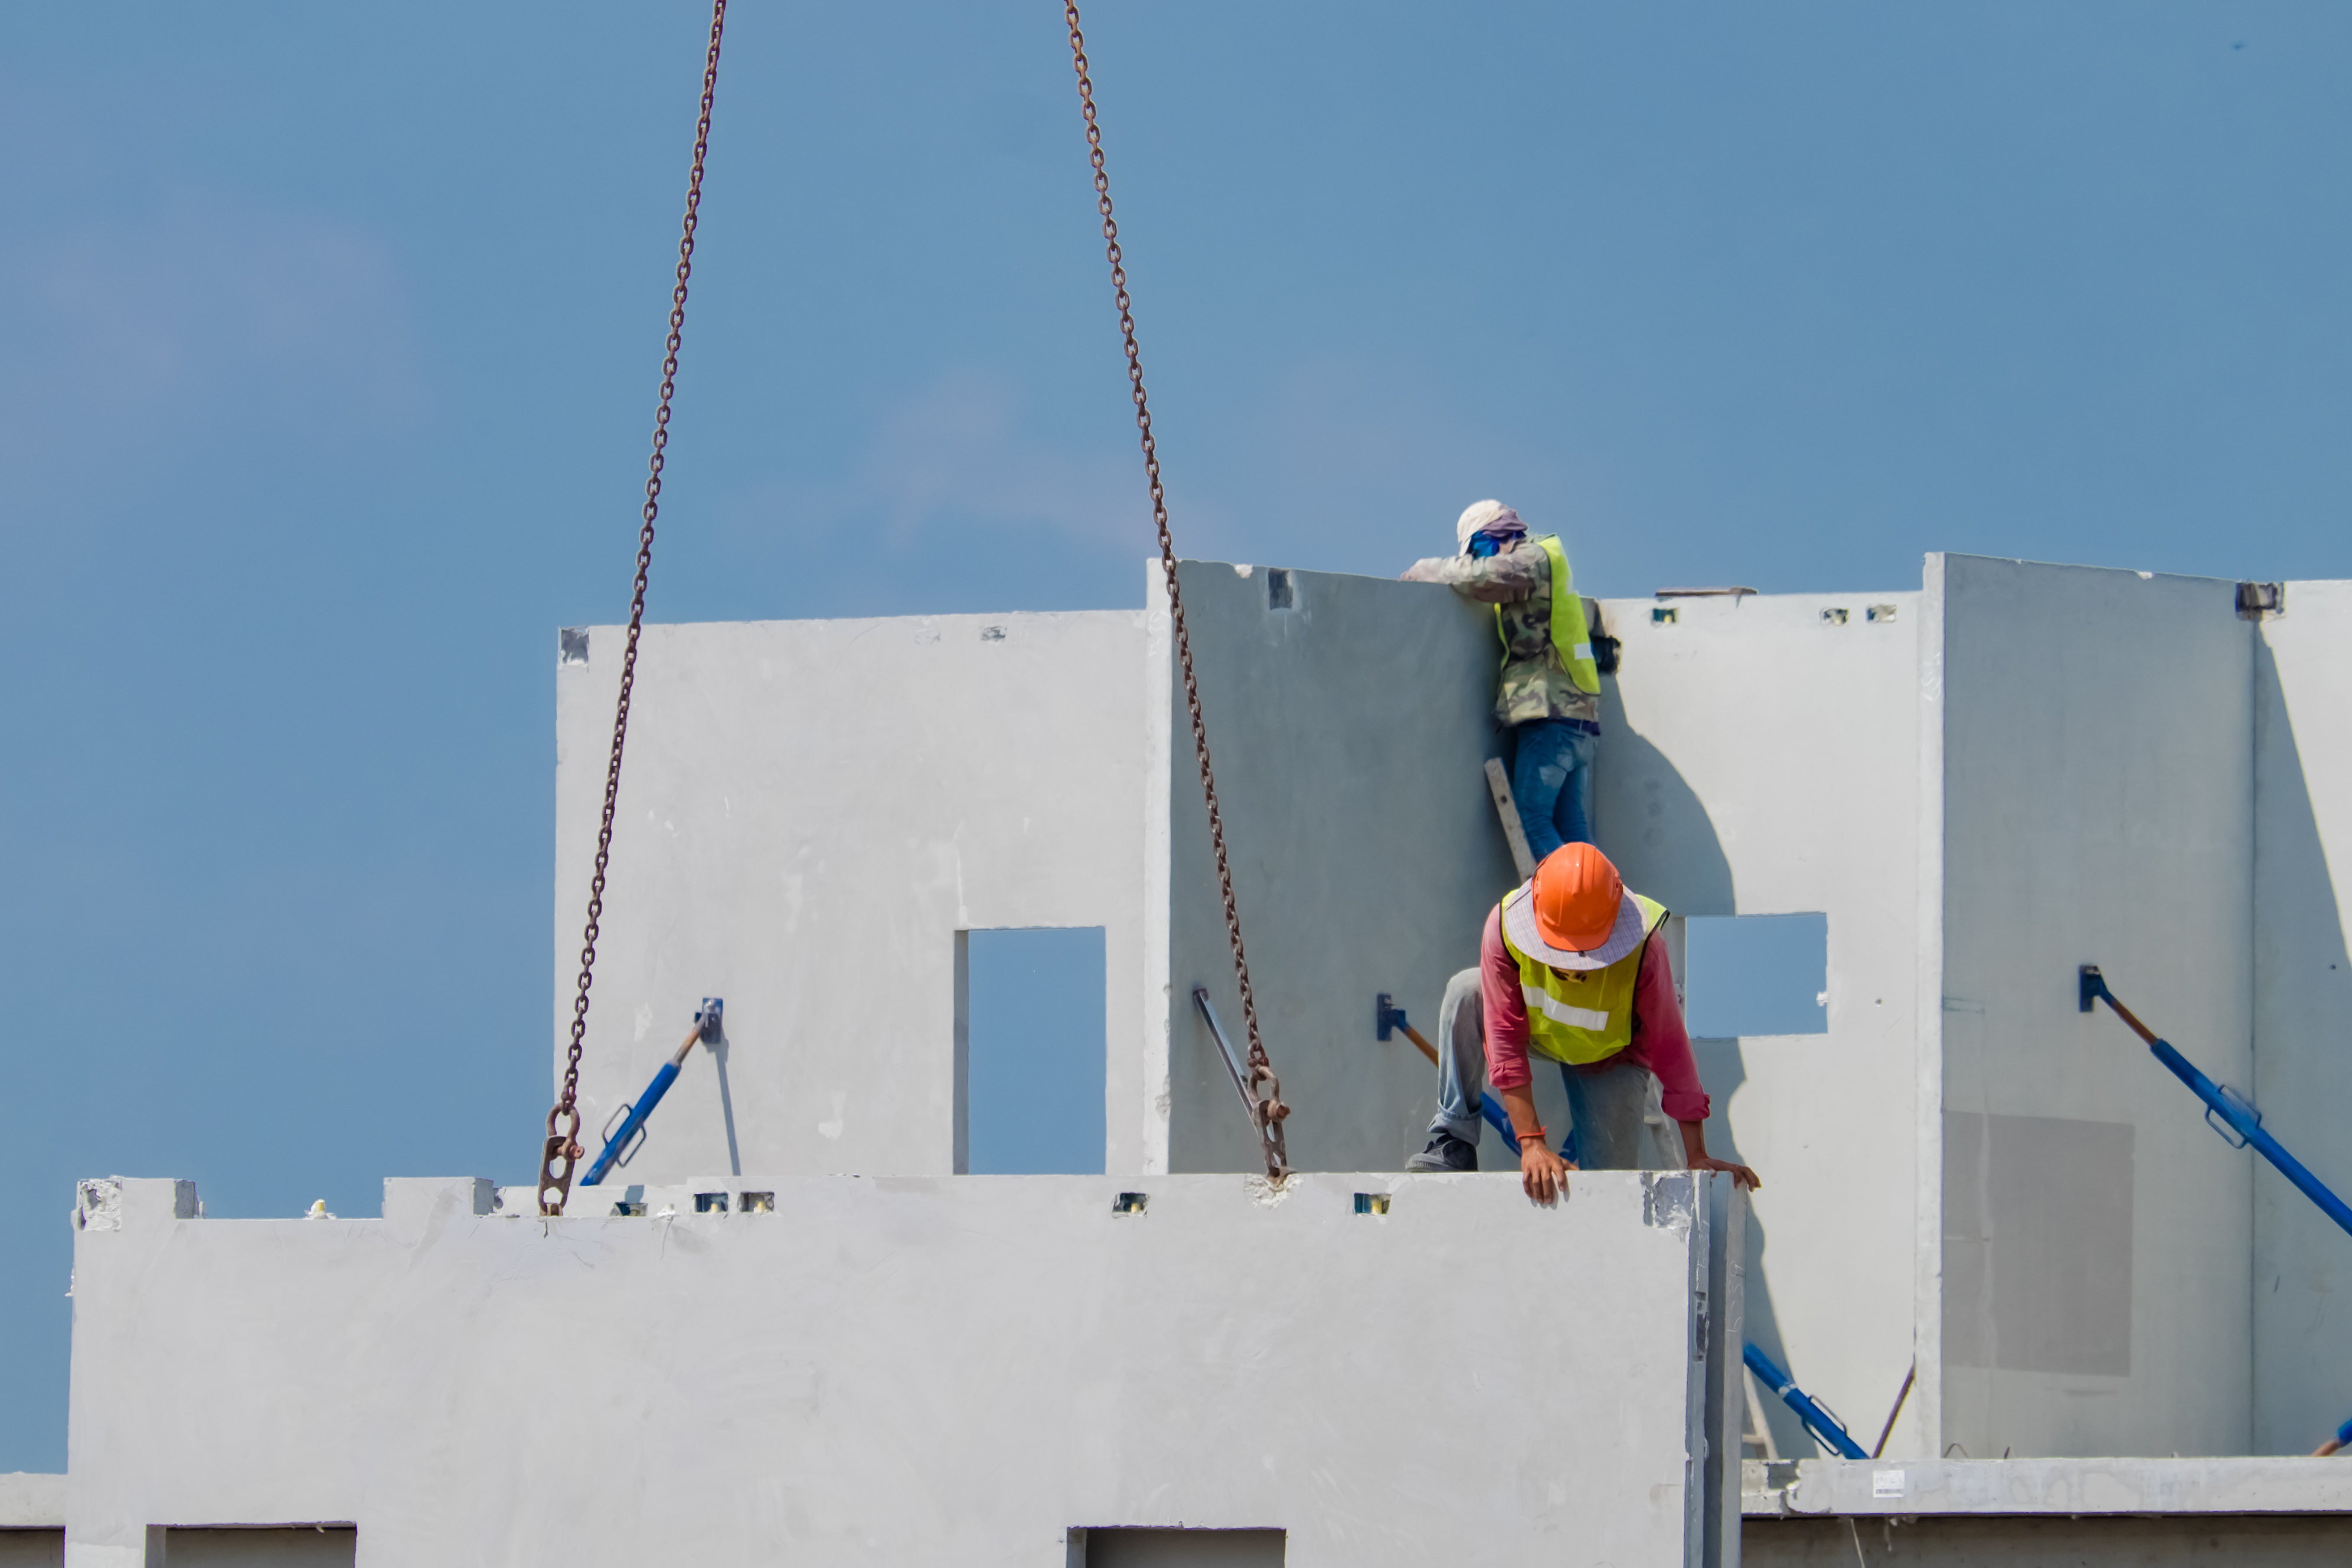 Construction workers move precast concrete panels into place on a construction site